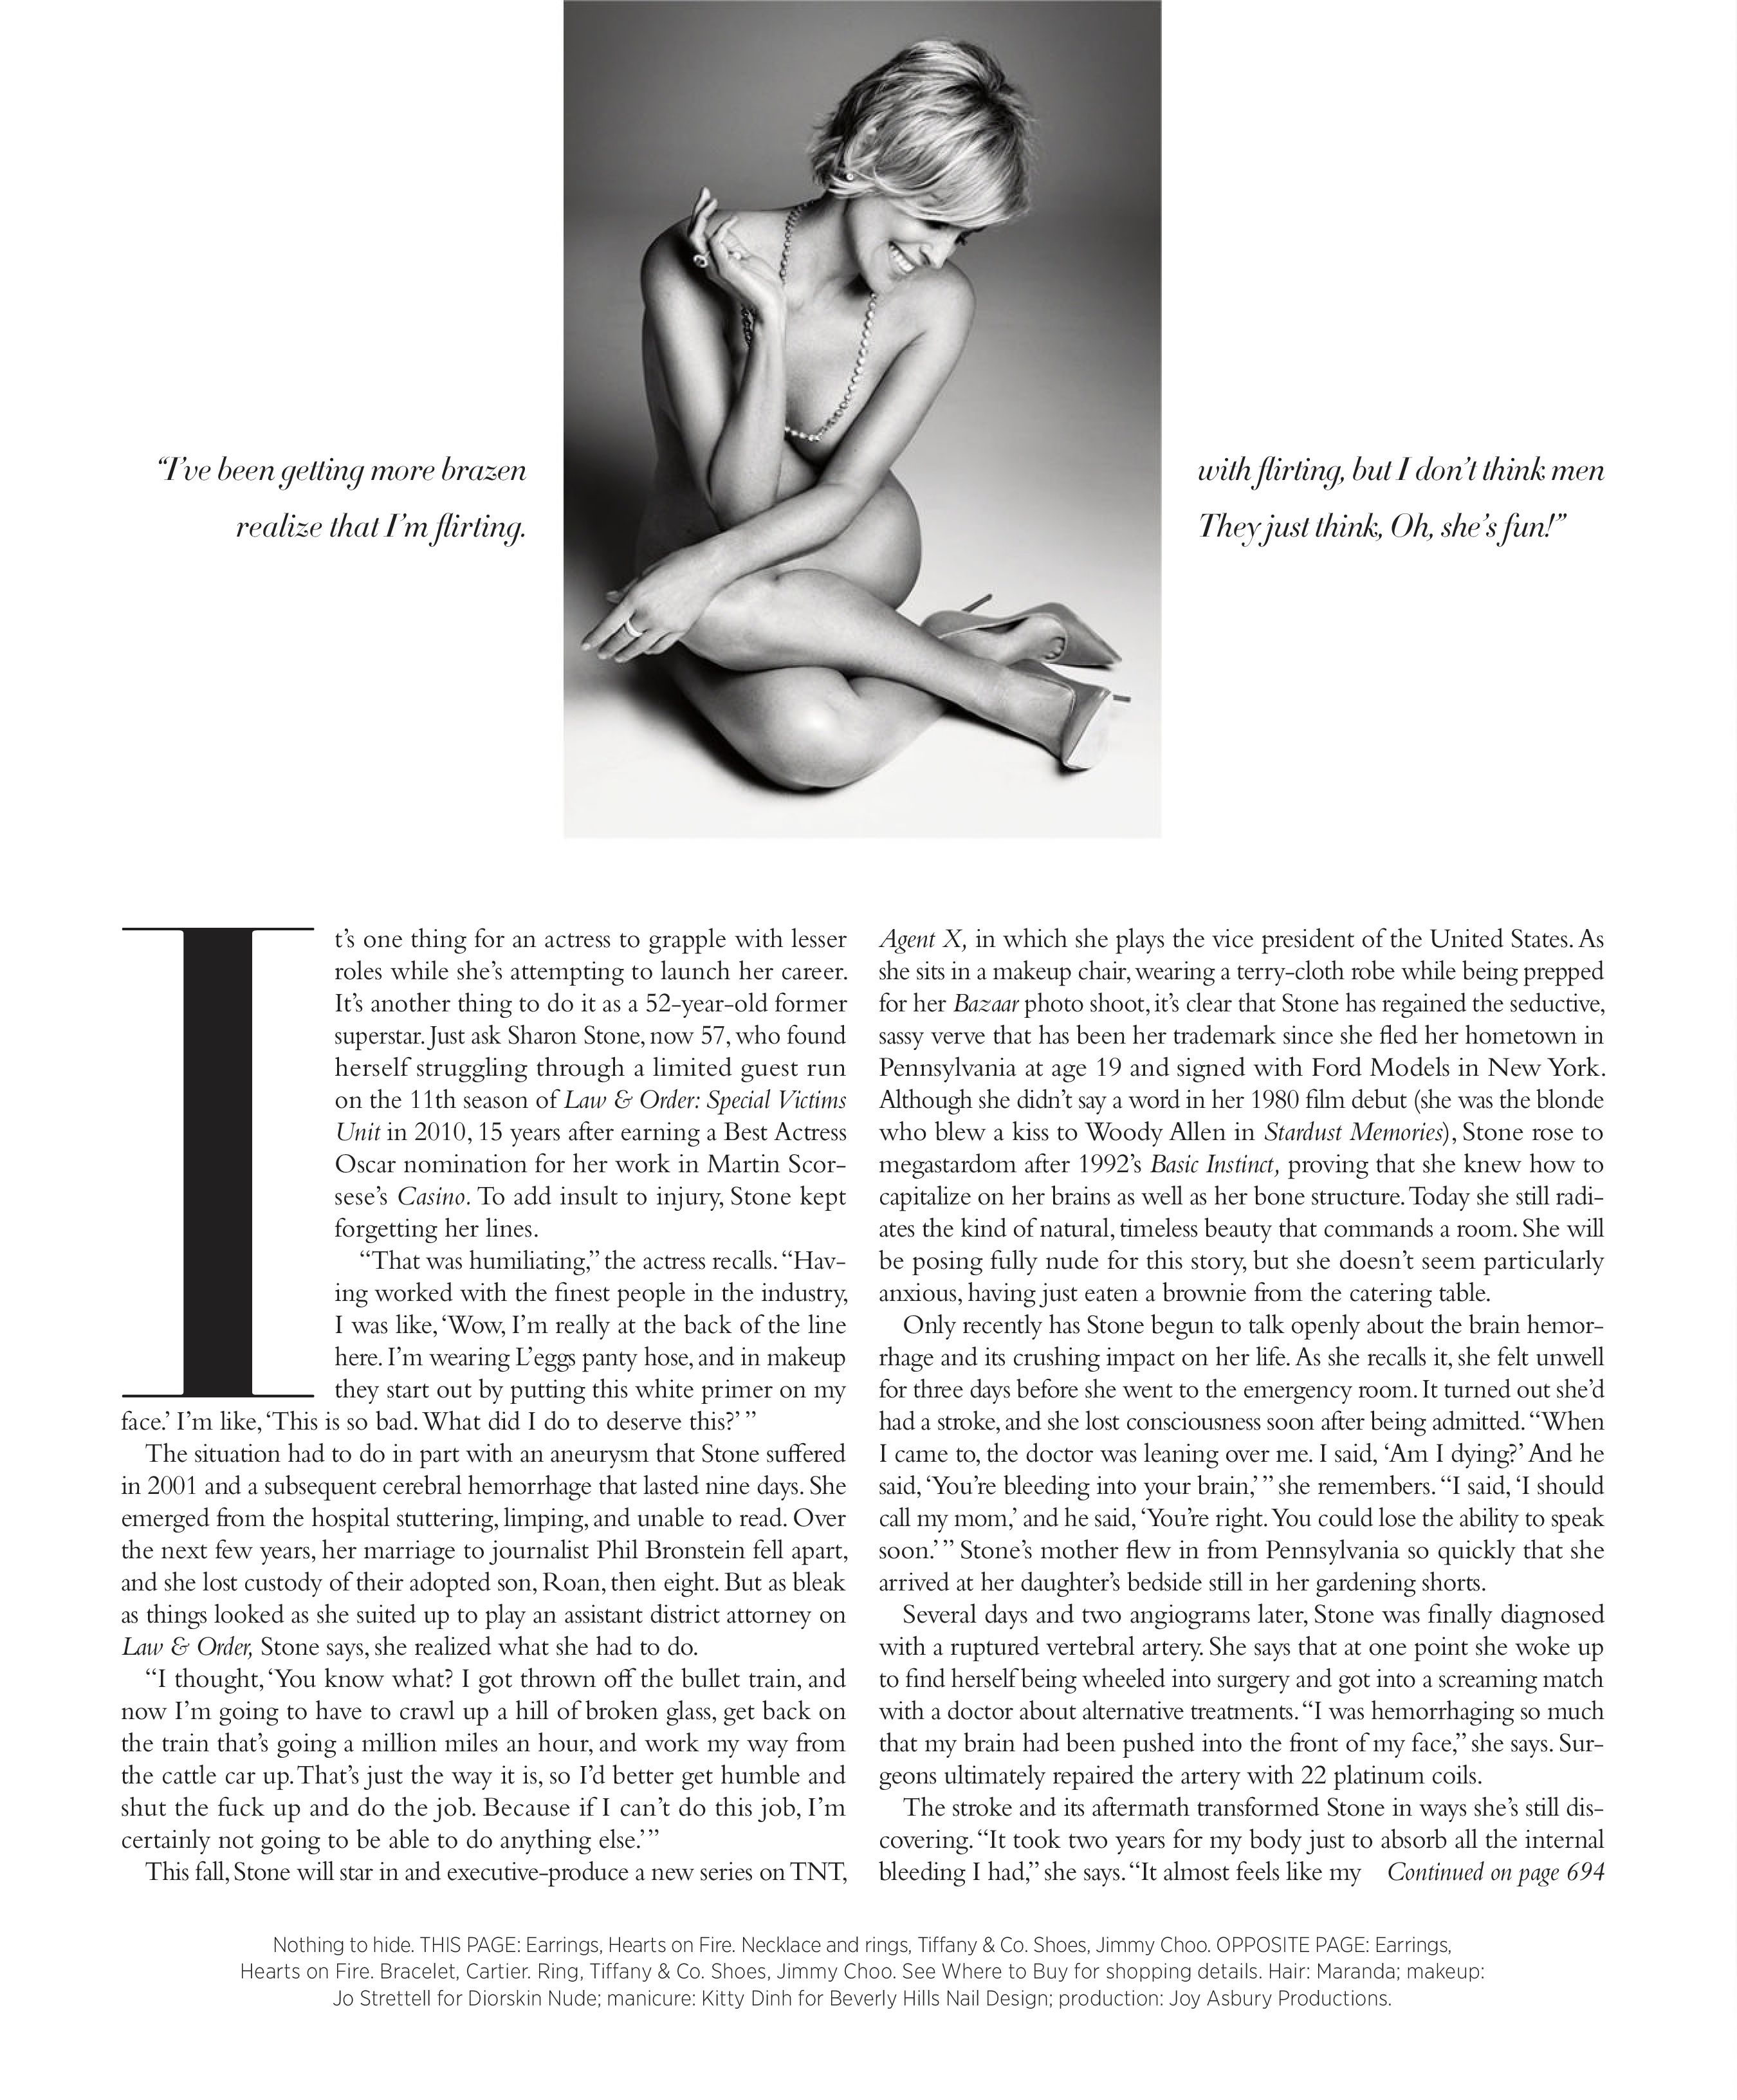 Nude photos of Sharon Stone